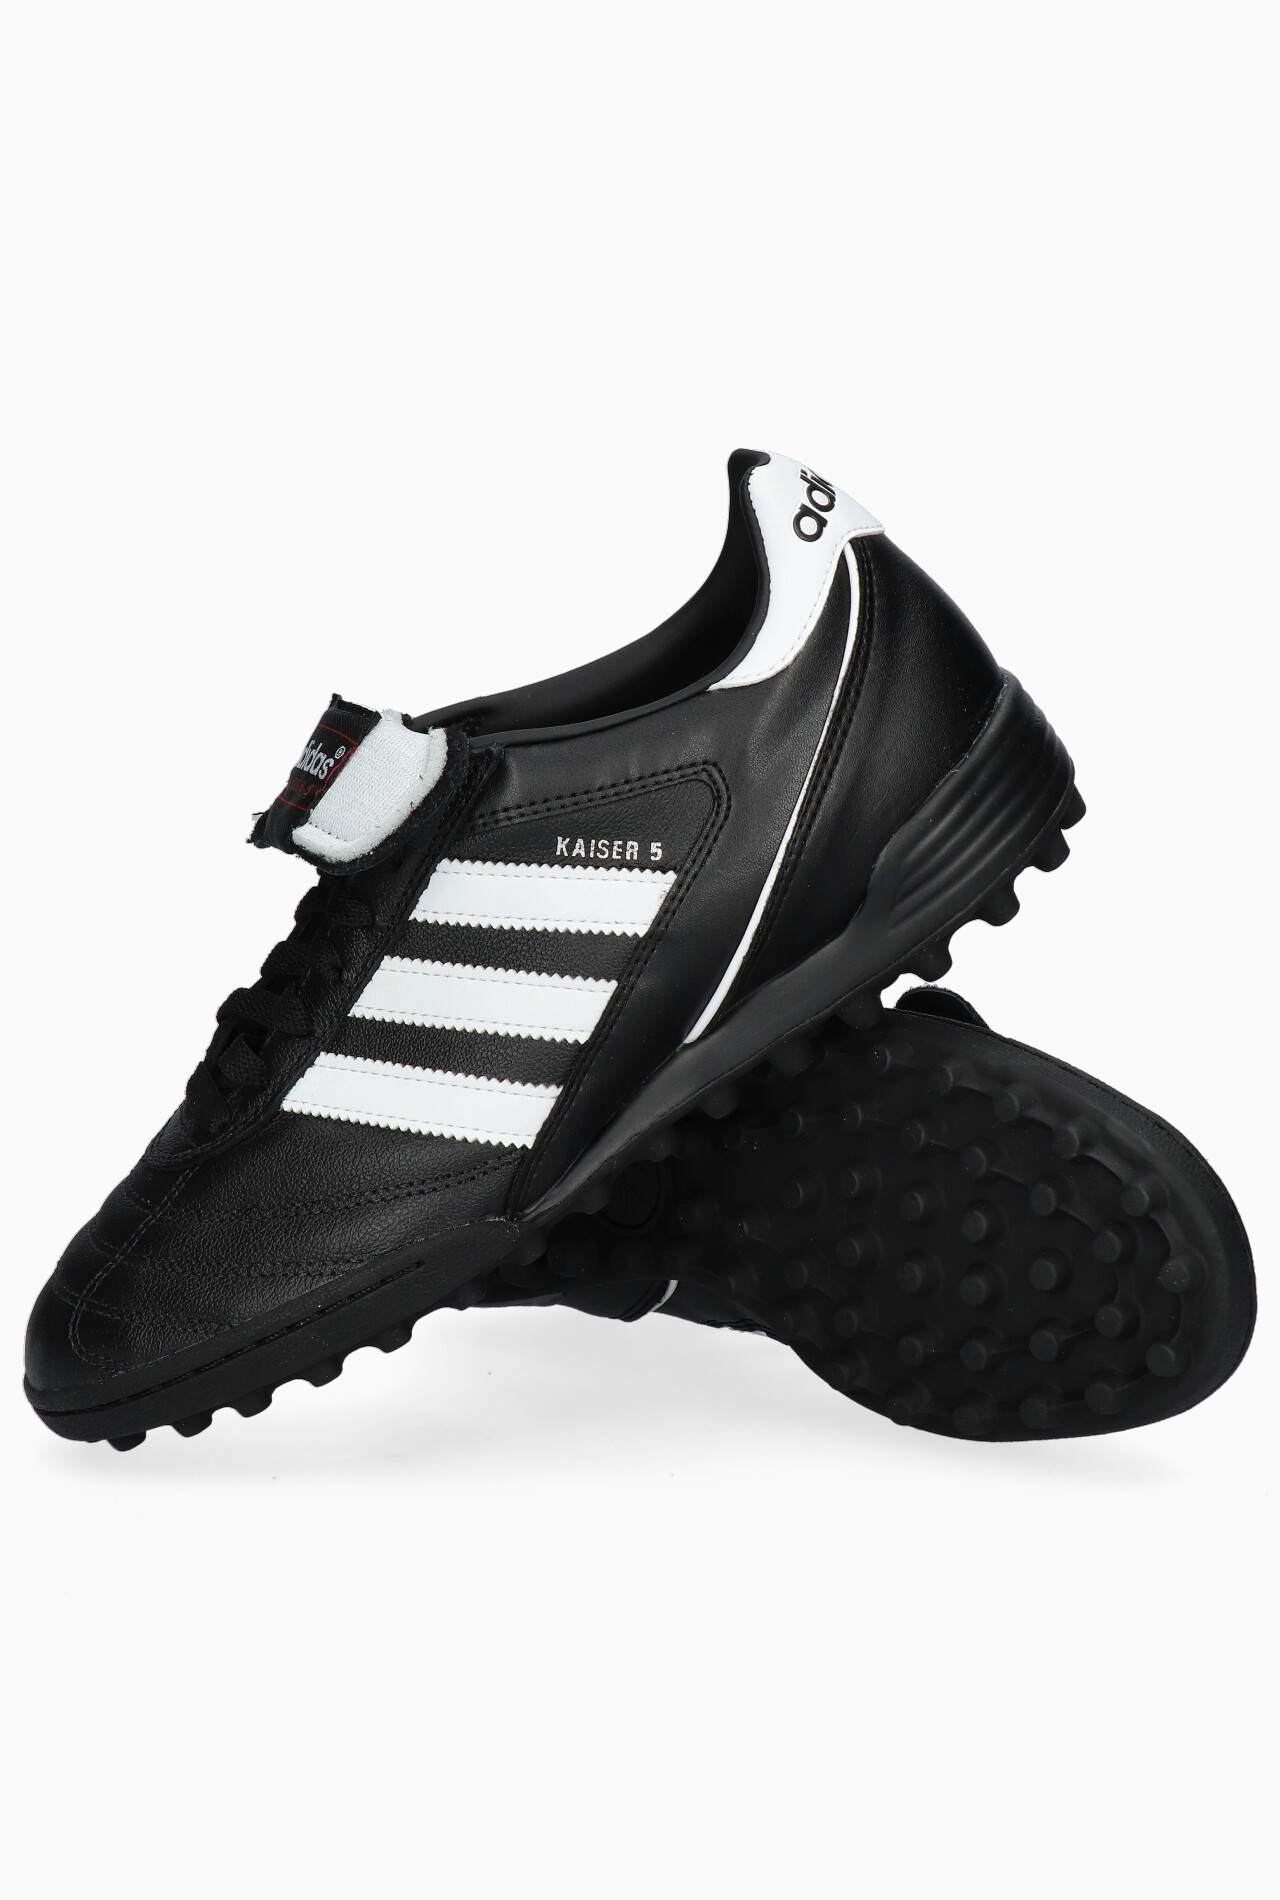 adidas Kaiser 5 Team Boots | R-GOL.com - Football boots \u0026 equipment